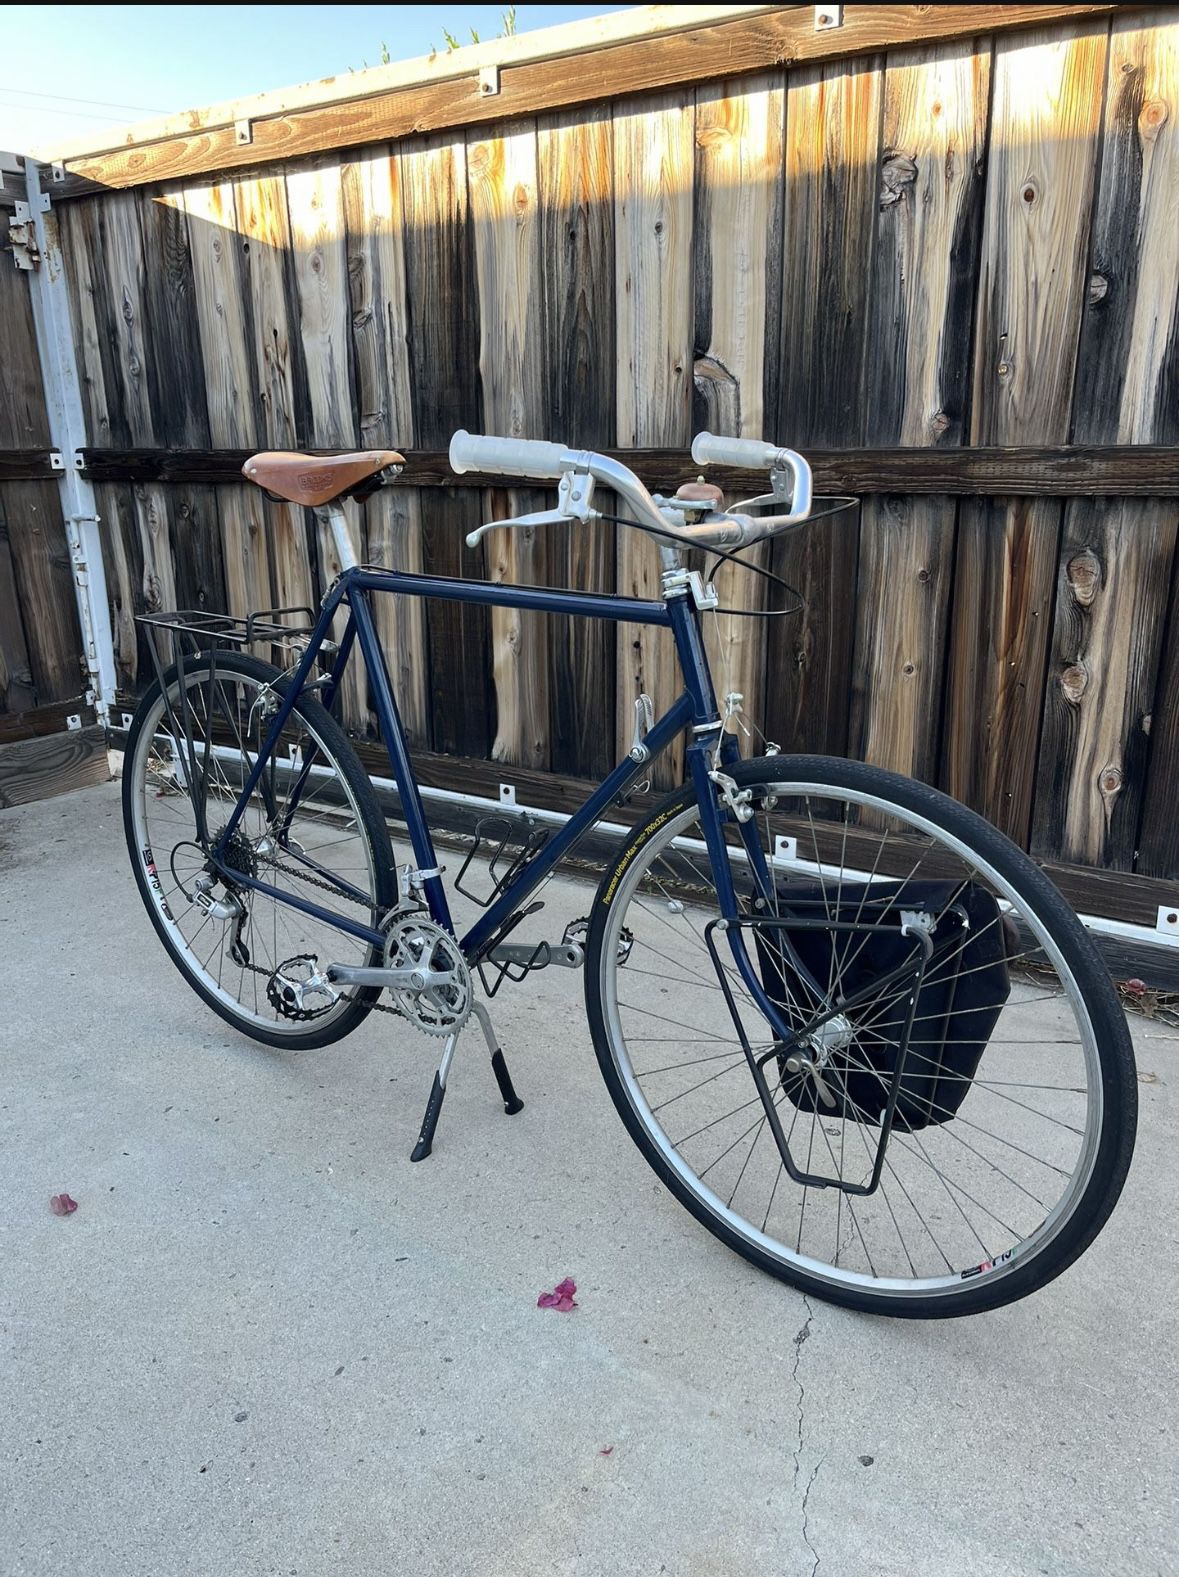 Vintage Raleigh Bicycle (90’s Road/touring Bike)